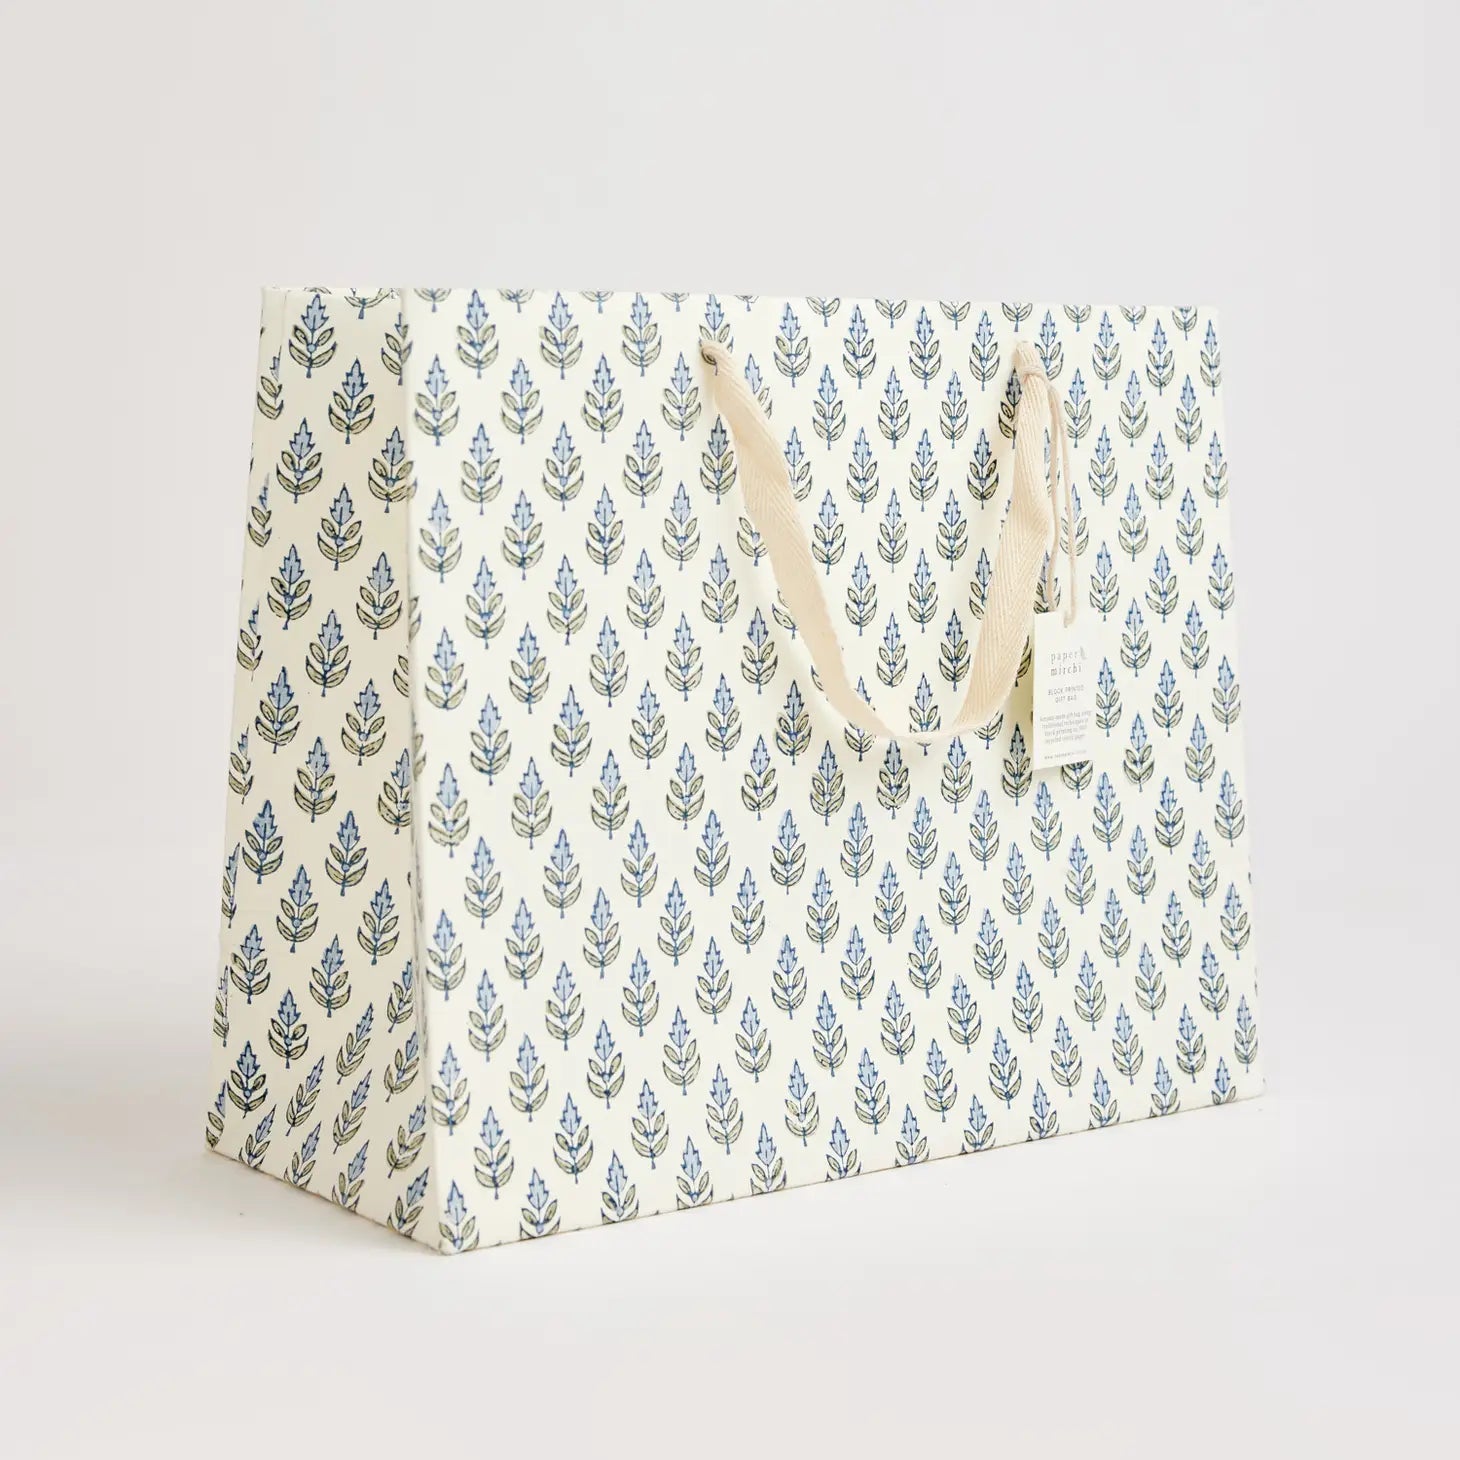 Blue Stone Hand Block Printed Gift Bag - small / medium / large